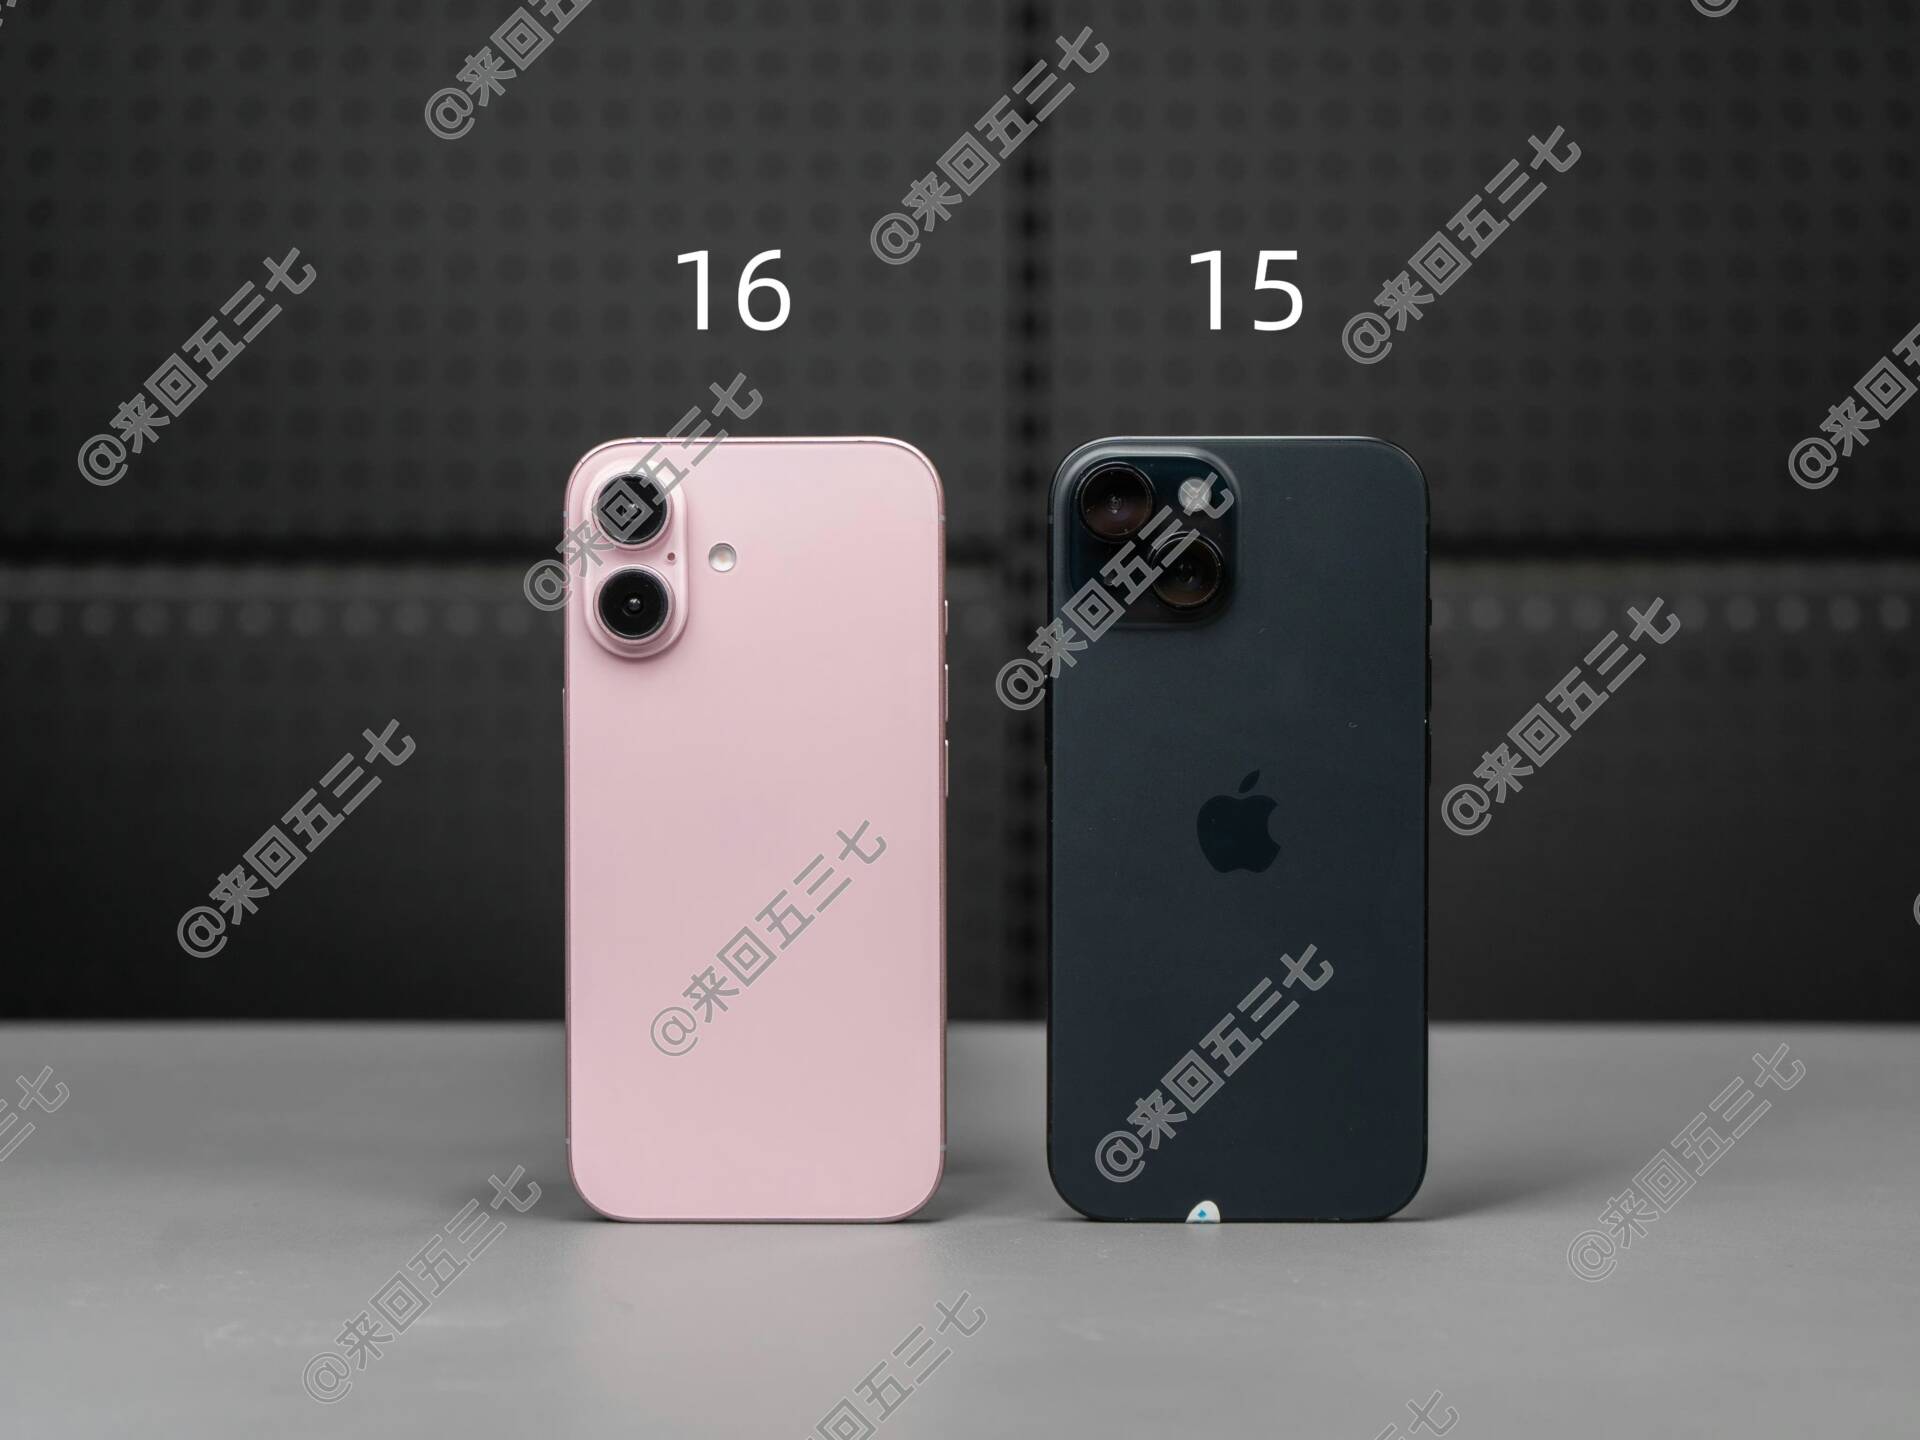 iPhone 16 vs iPhone 15